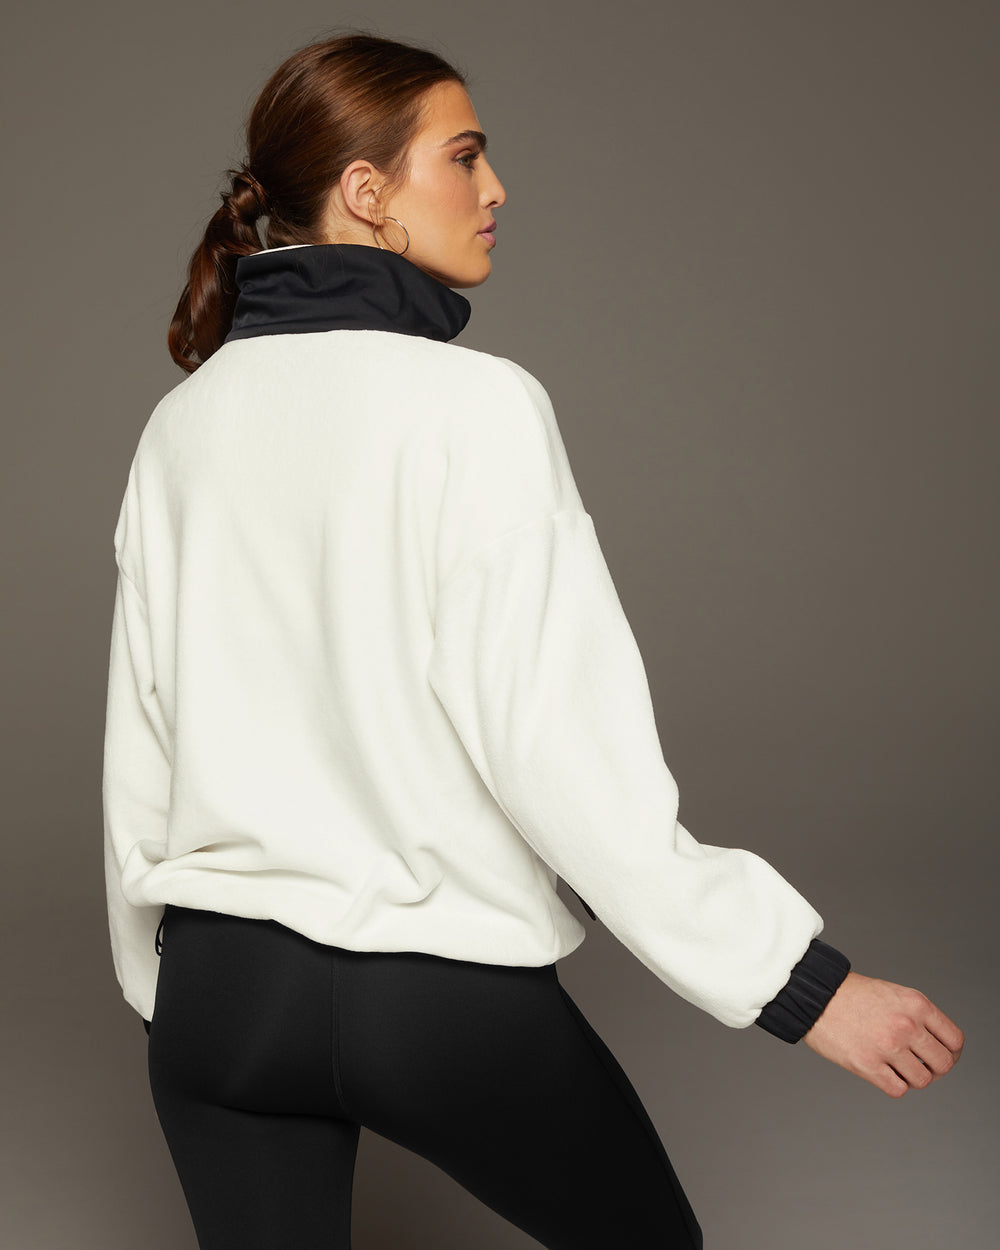 Shop the MICHI Powder Jacket | Women\'s Designer Activewear